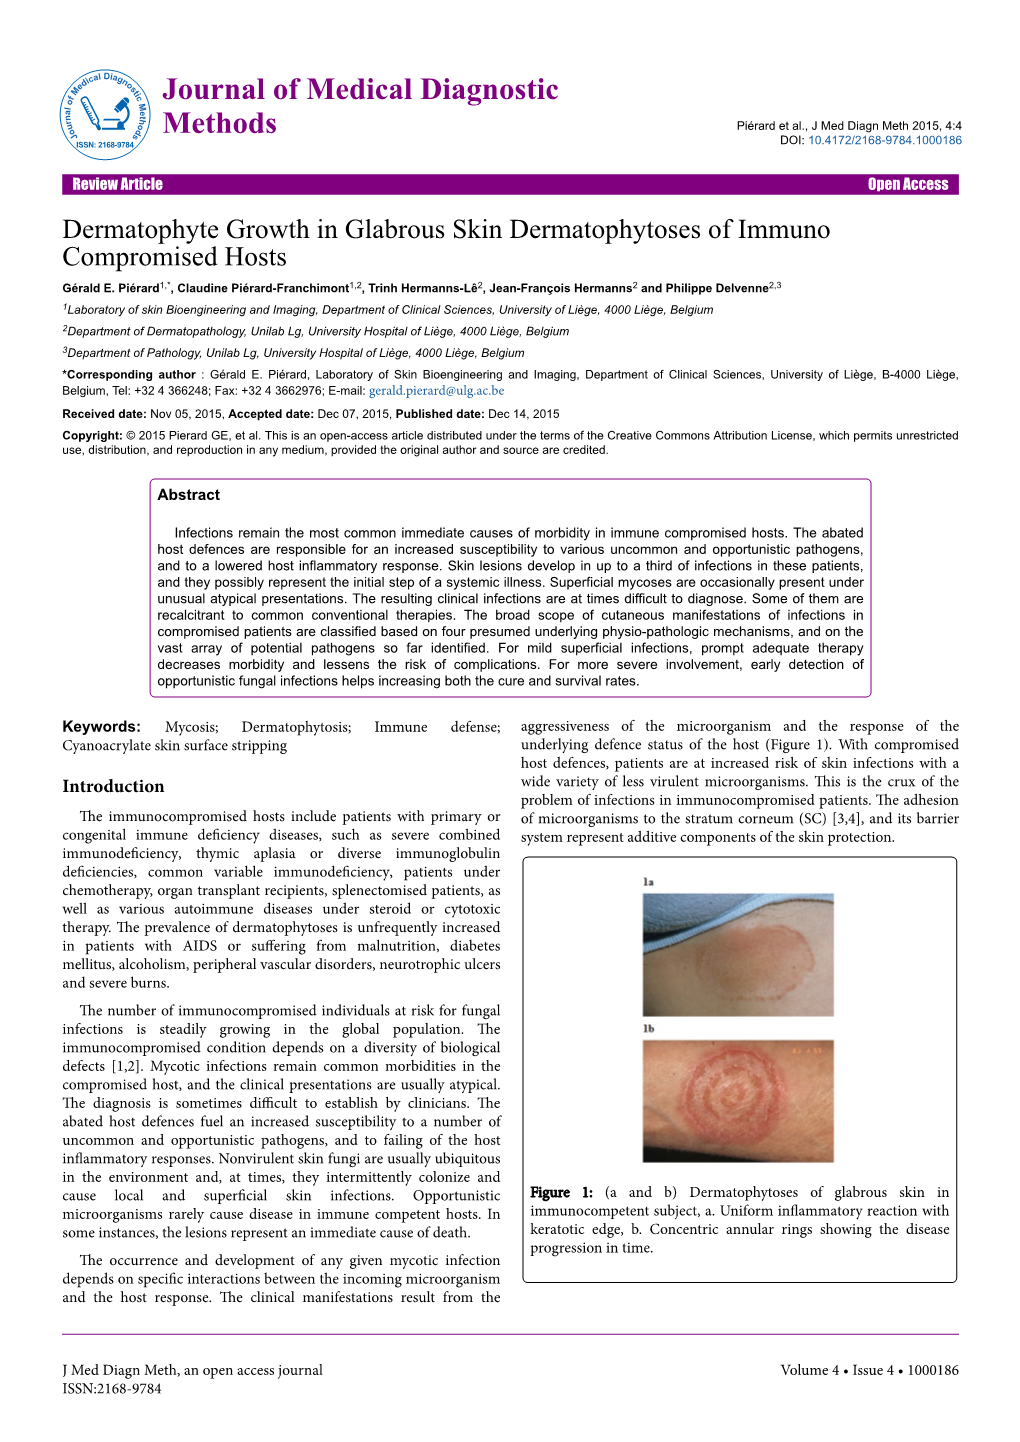 Dermatophyte Growth in Glabrous Skin Dermatophytoses of Immuno Compromised Hosts Gérald E